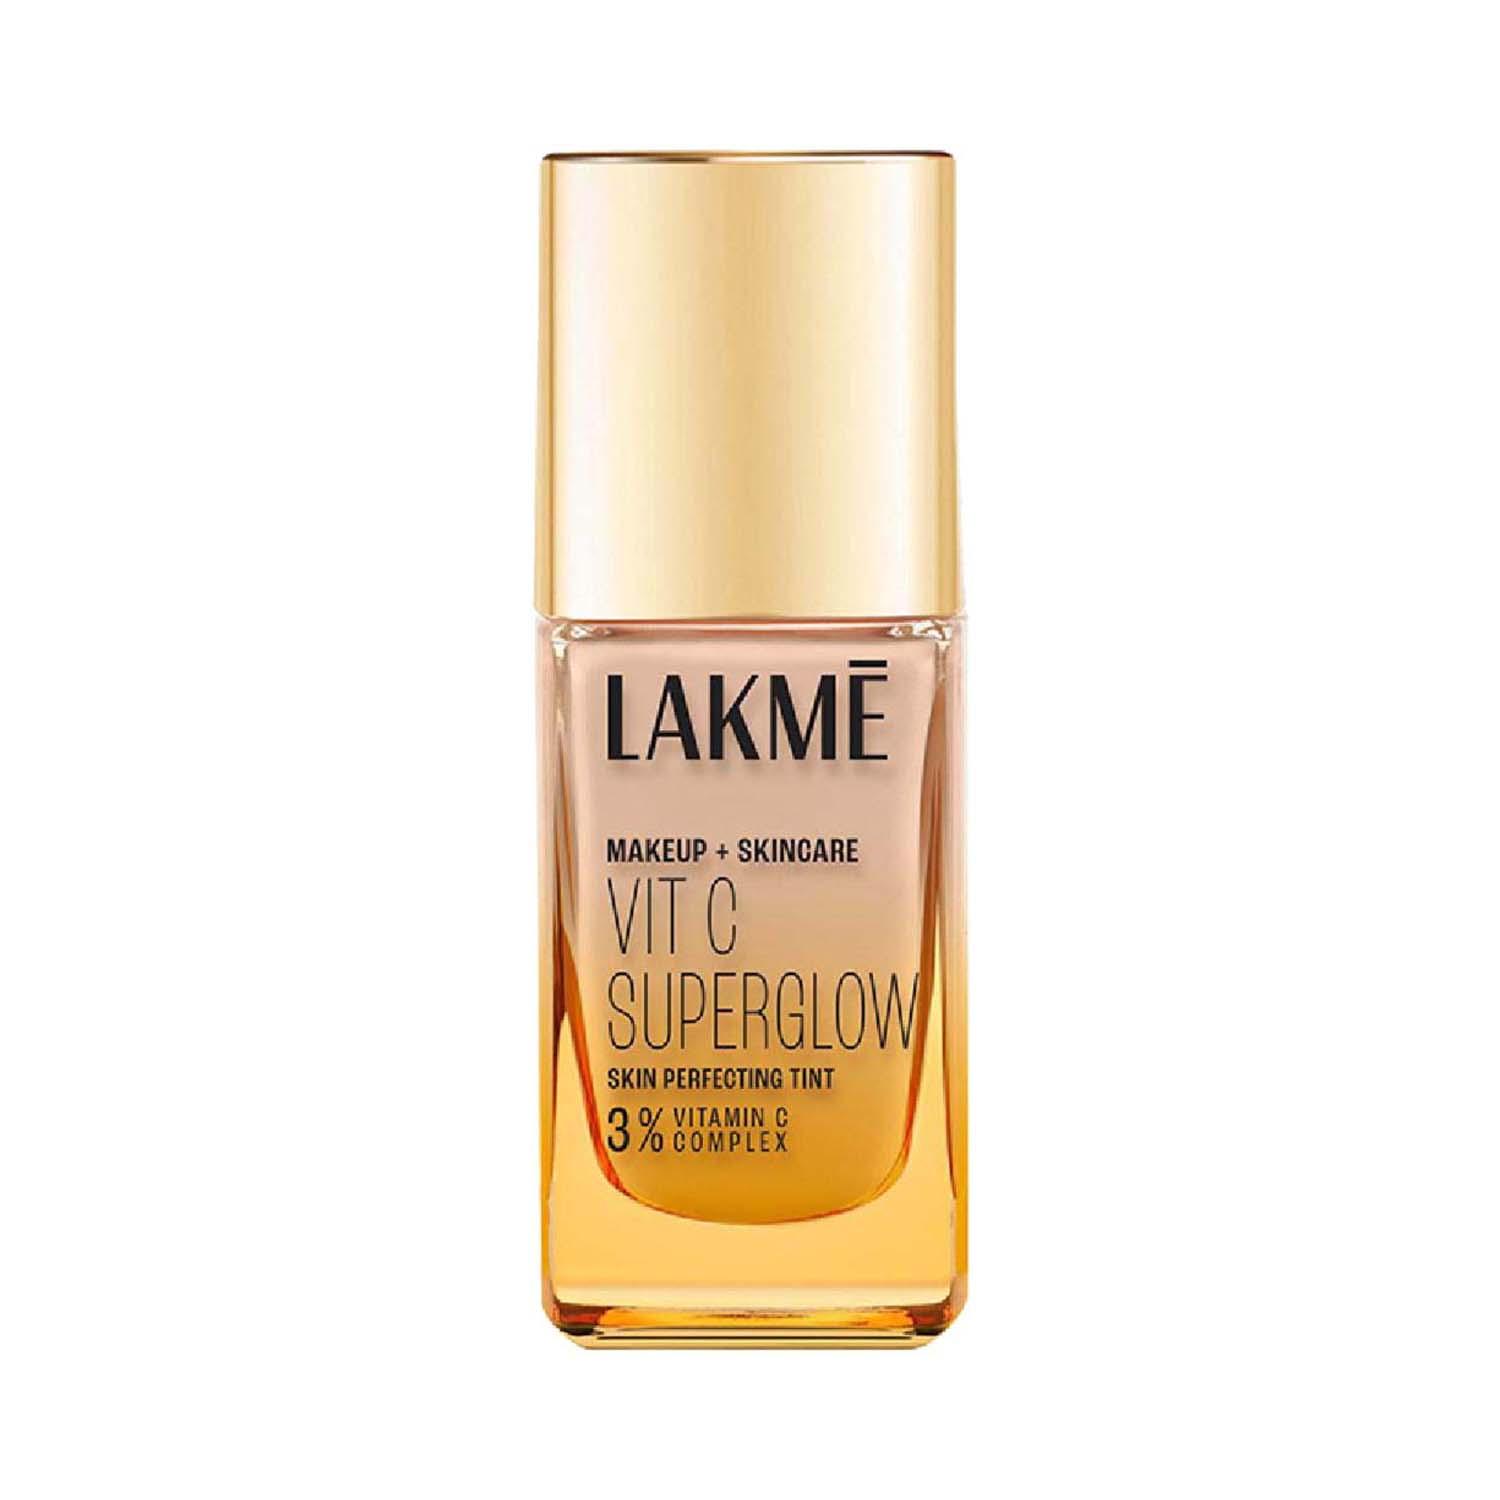 Lakme | Lakme Makeup+Skincare Vit C Superglow Skin Perfecting Tint - Warm Sand W160 (25 ml)